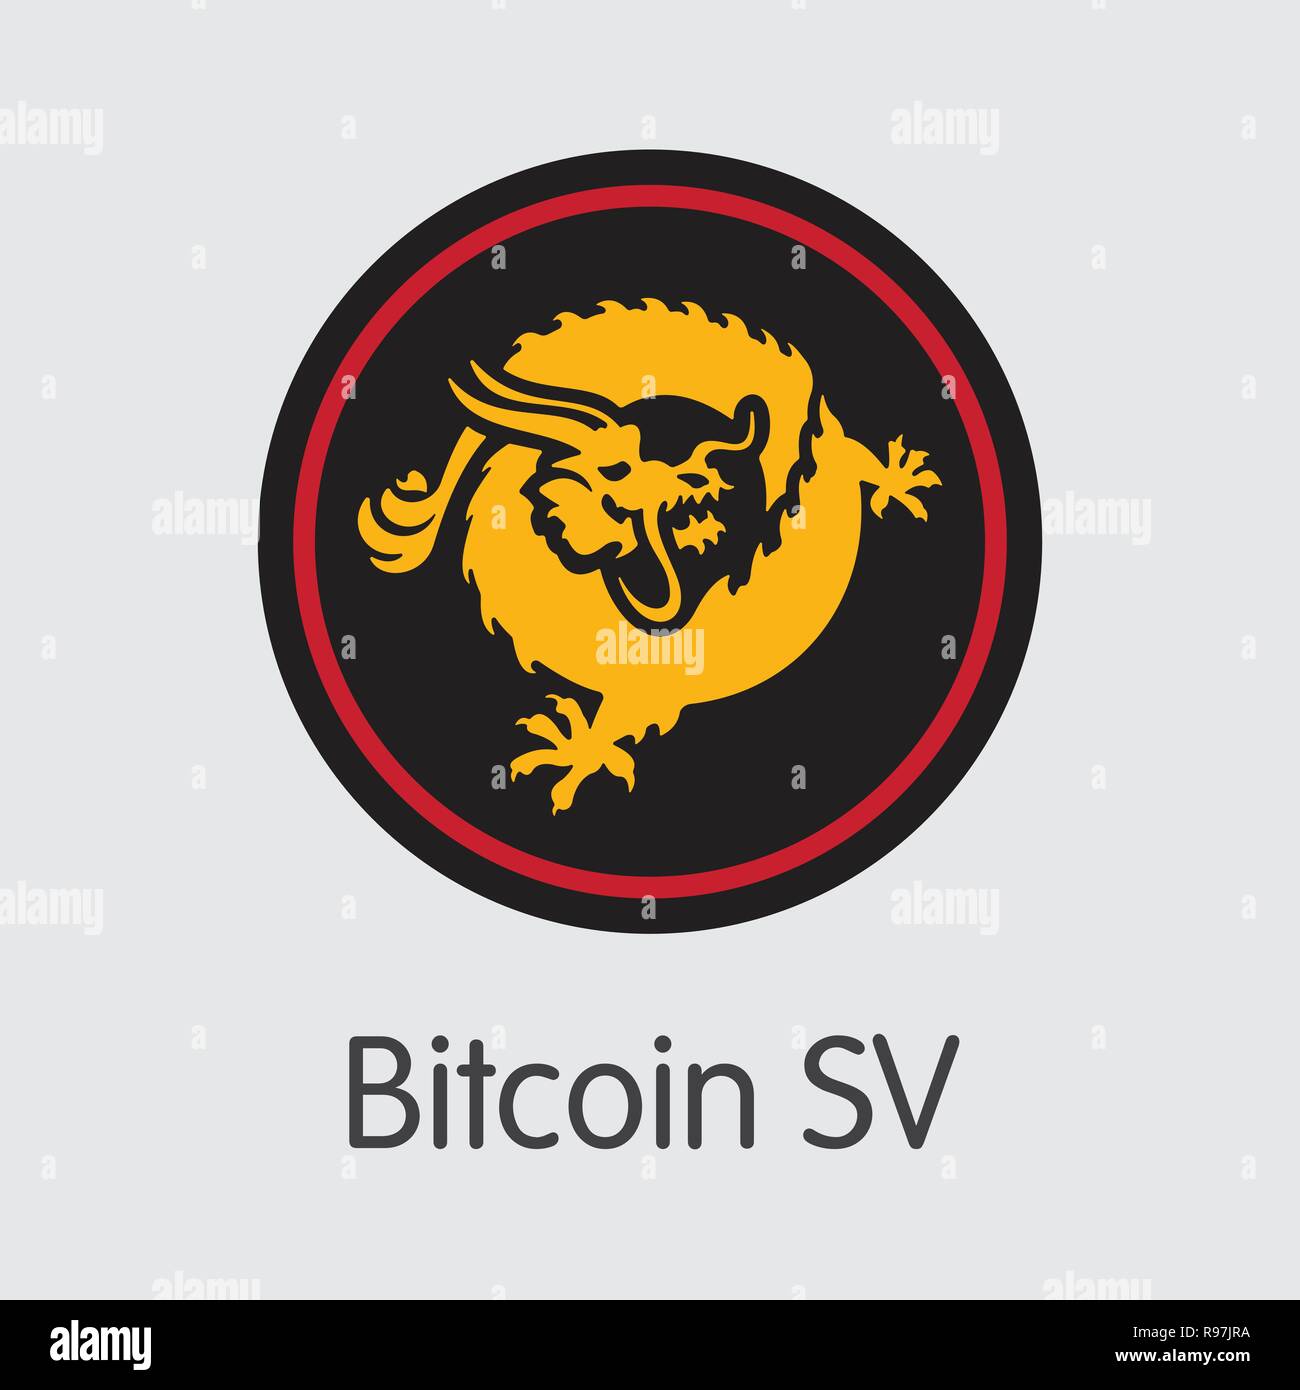 BSV - Bitcoin Sv. The Crypto Coins or Cryptocurrency Logo. Stock Vector